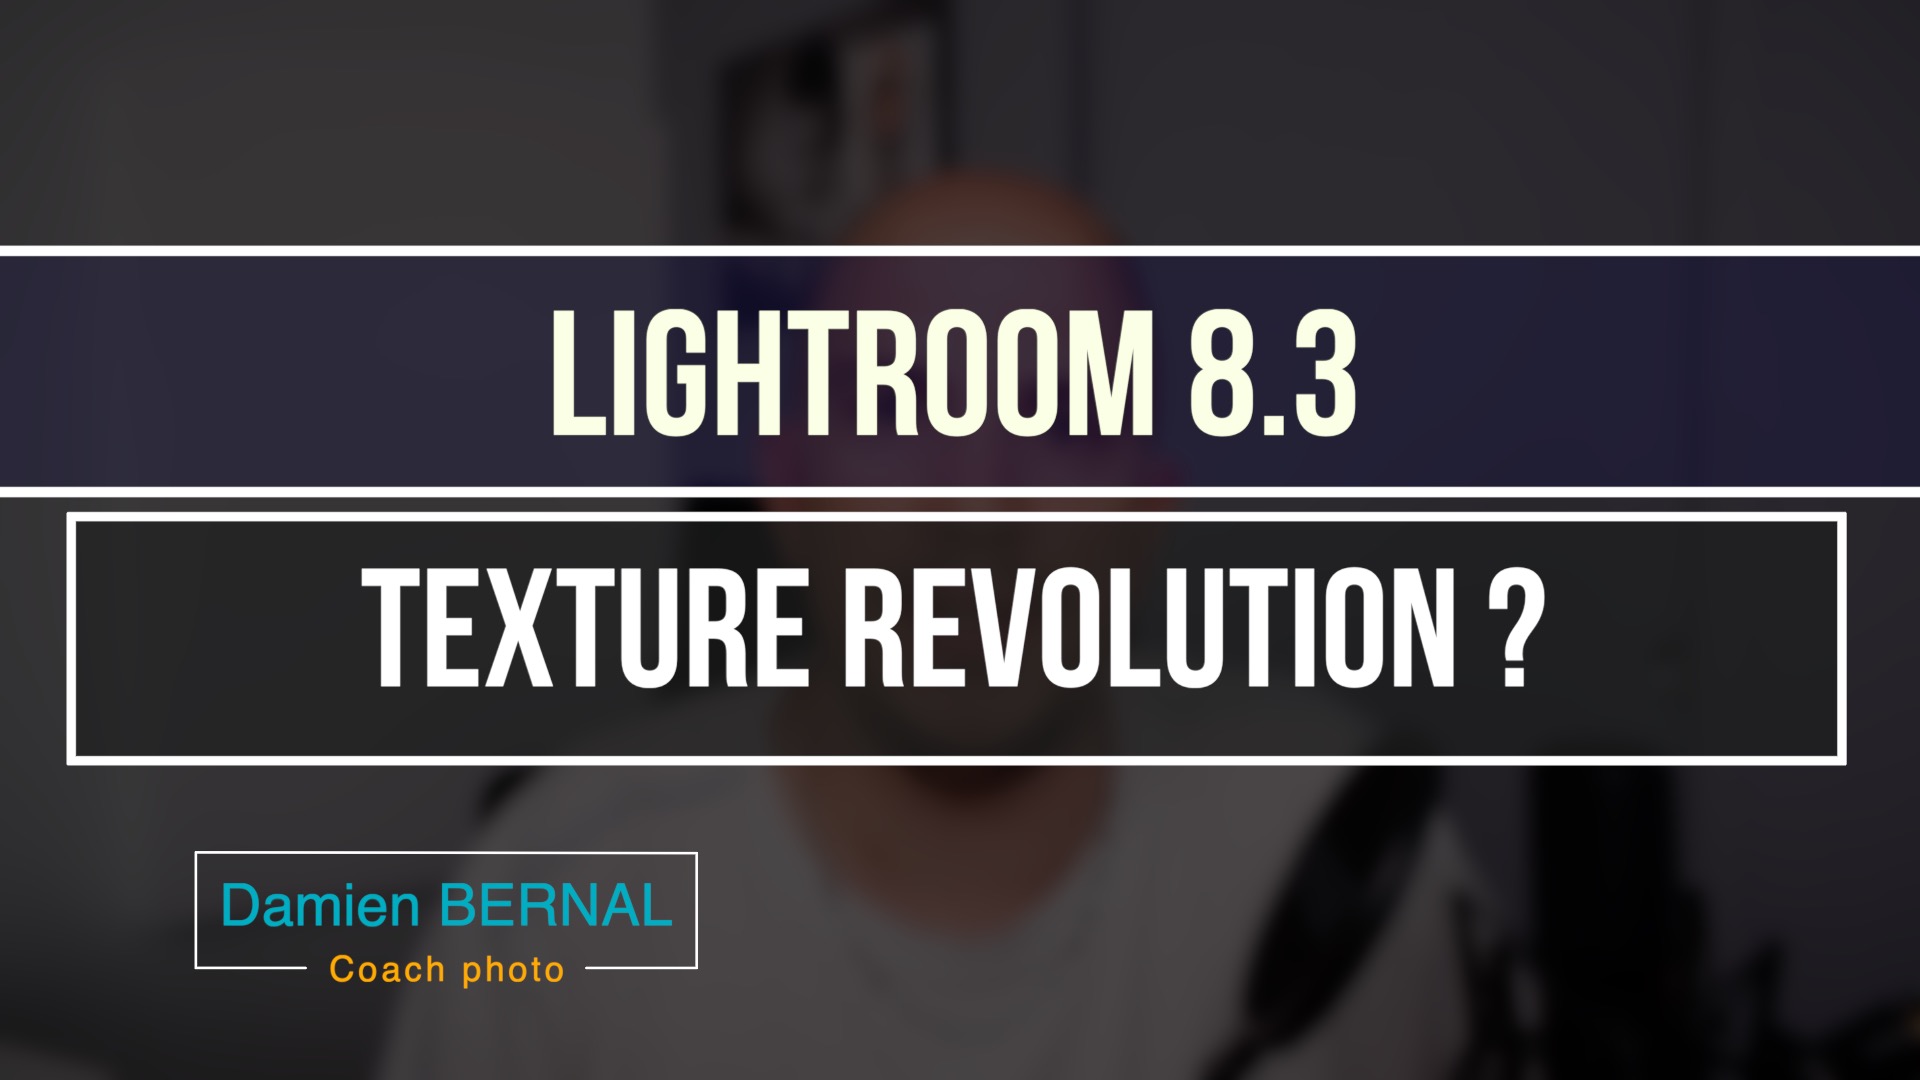 Lightroom 8.3